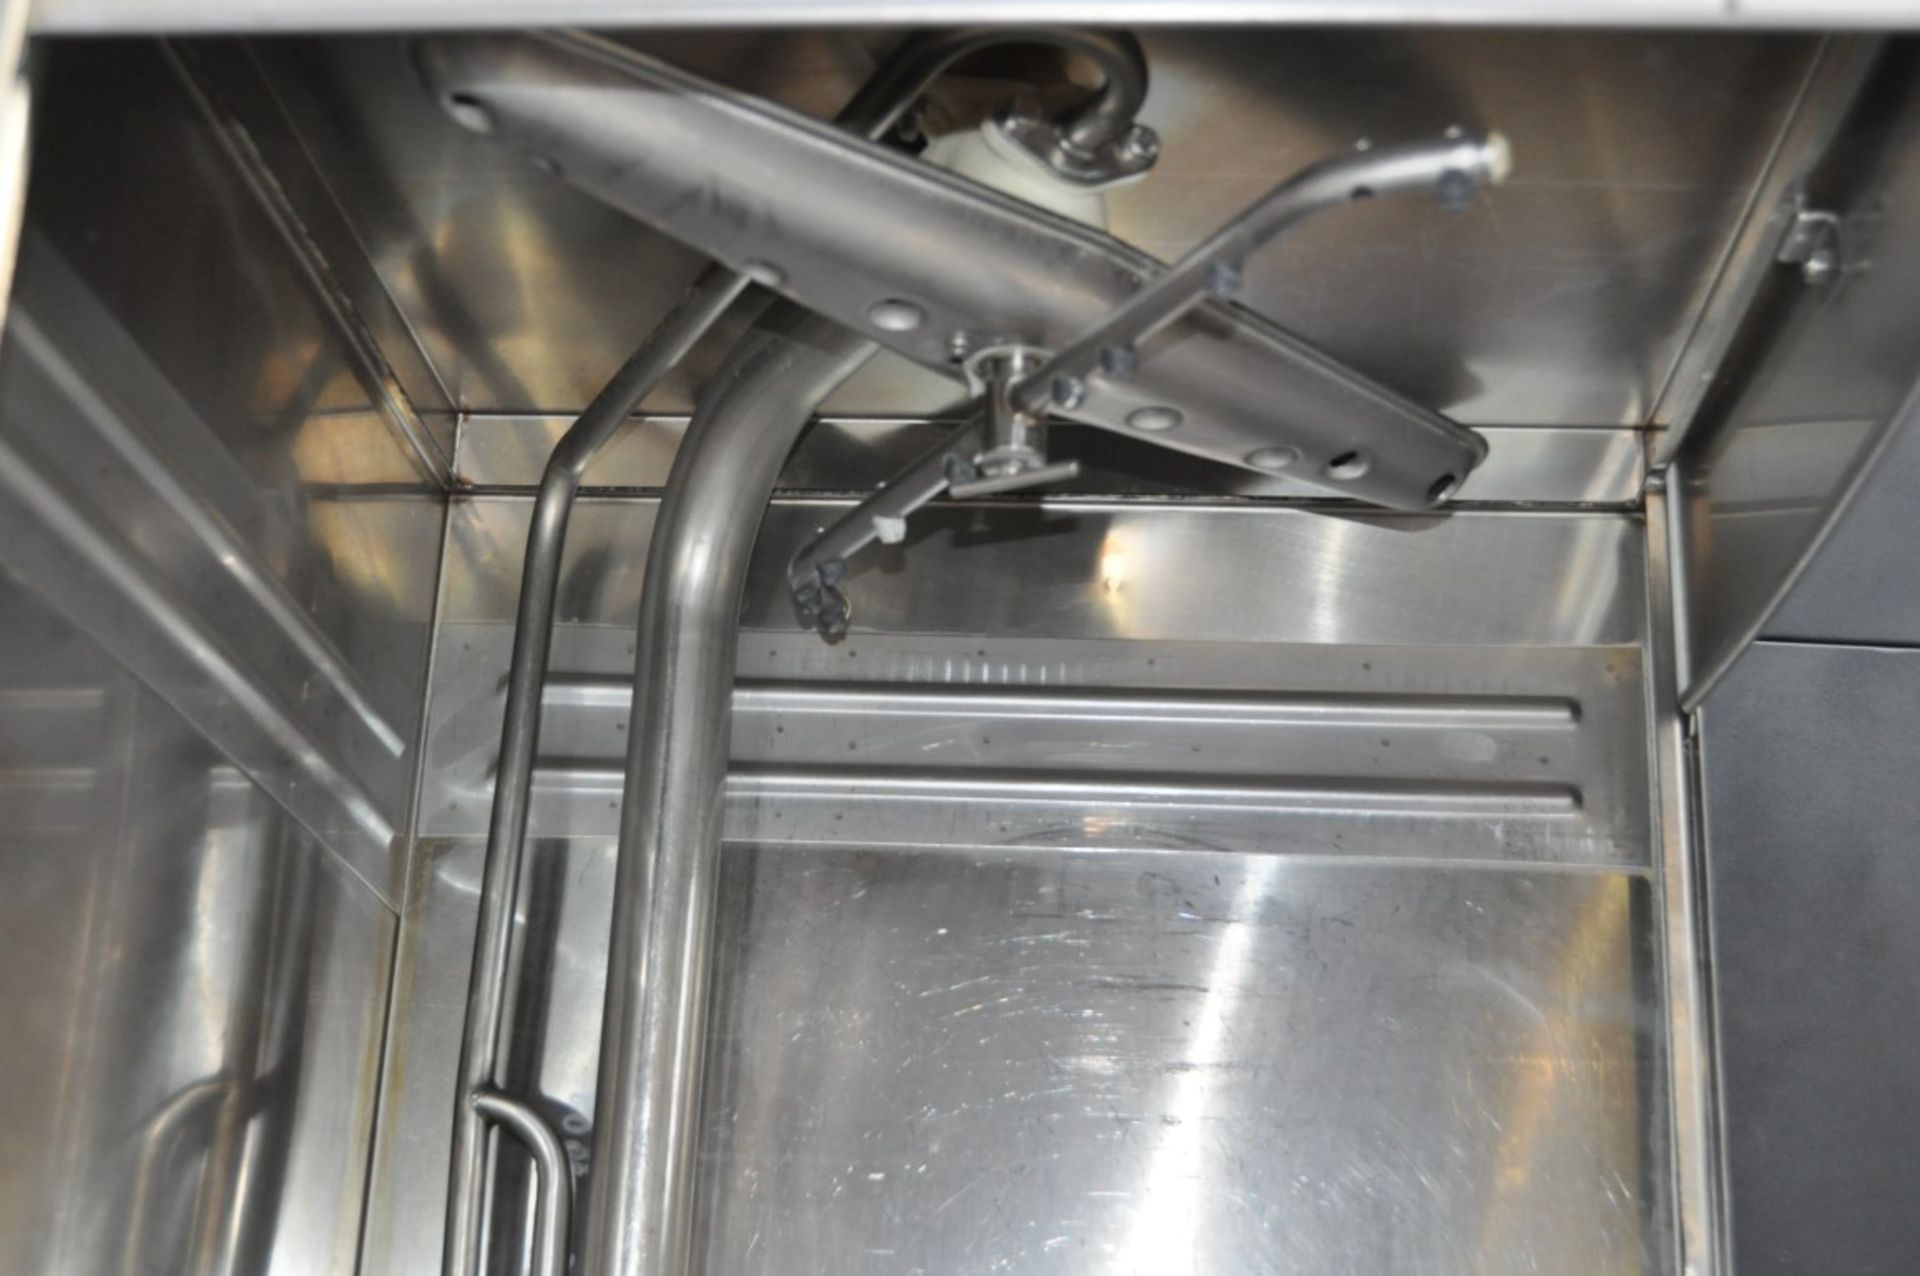 1 x Hobart Amizec Dishwasher / Glasswasher - Ideal For Cafes, Bars, Restaurants - Disconnected, - Image 7 of 9